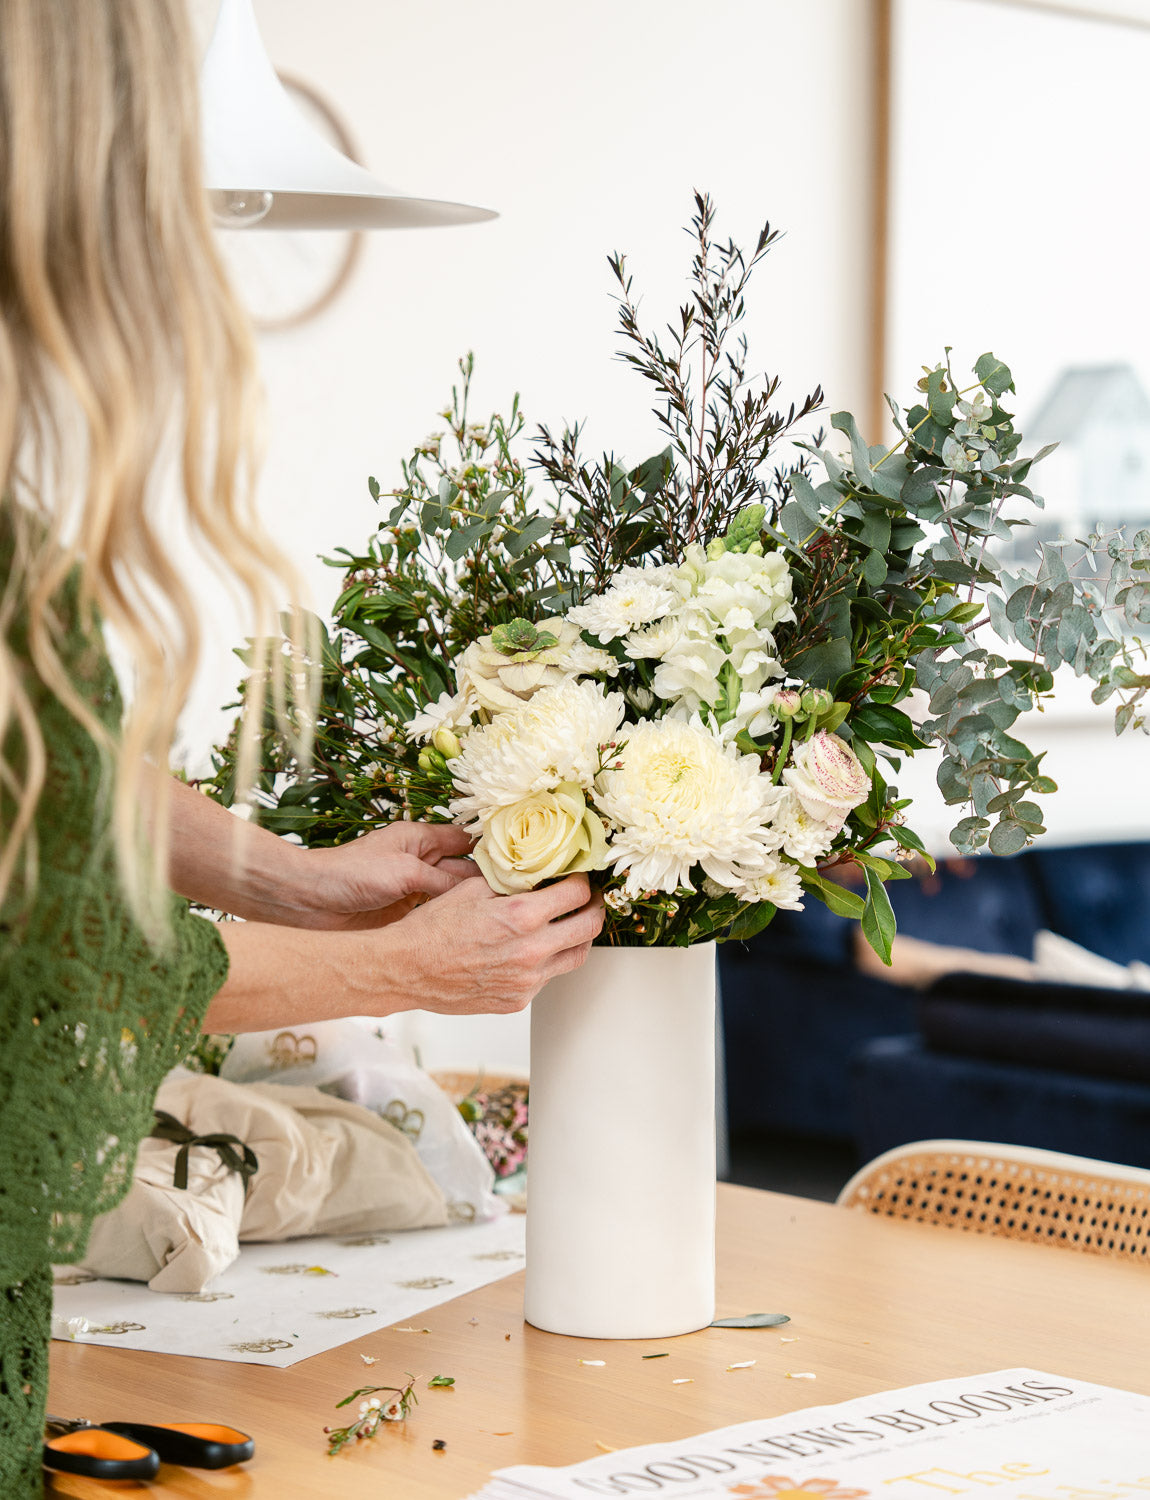 Flowers & A Vase